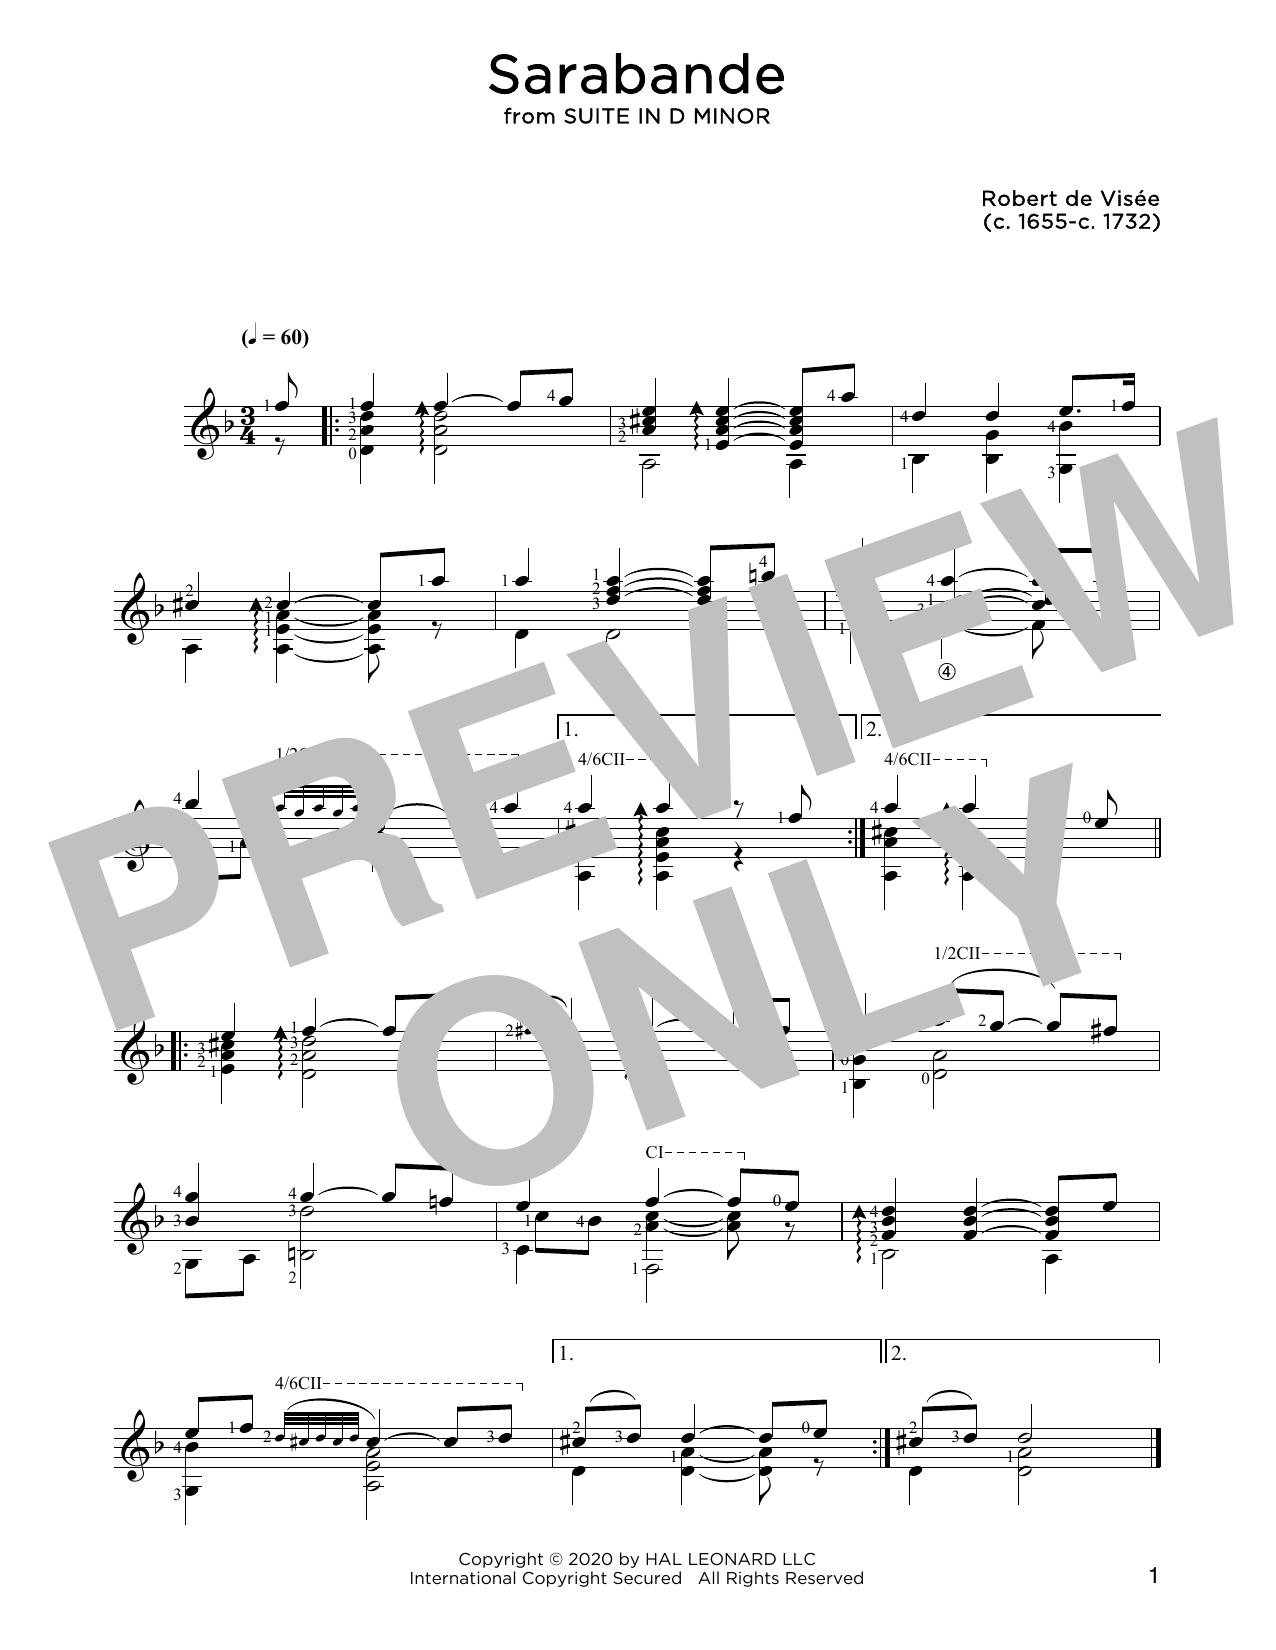 Robert de Visee Sarabande Sheet Music Notes & Chords for Solo Guitar - Download or Print PDF